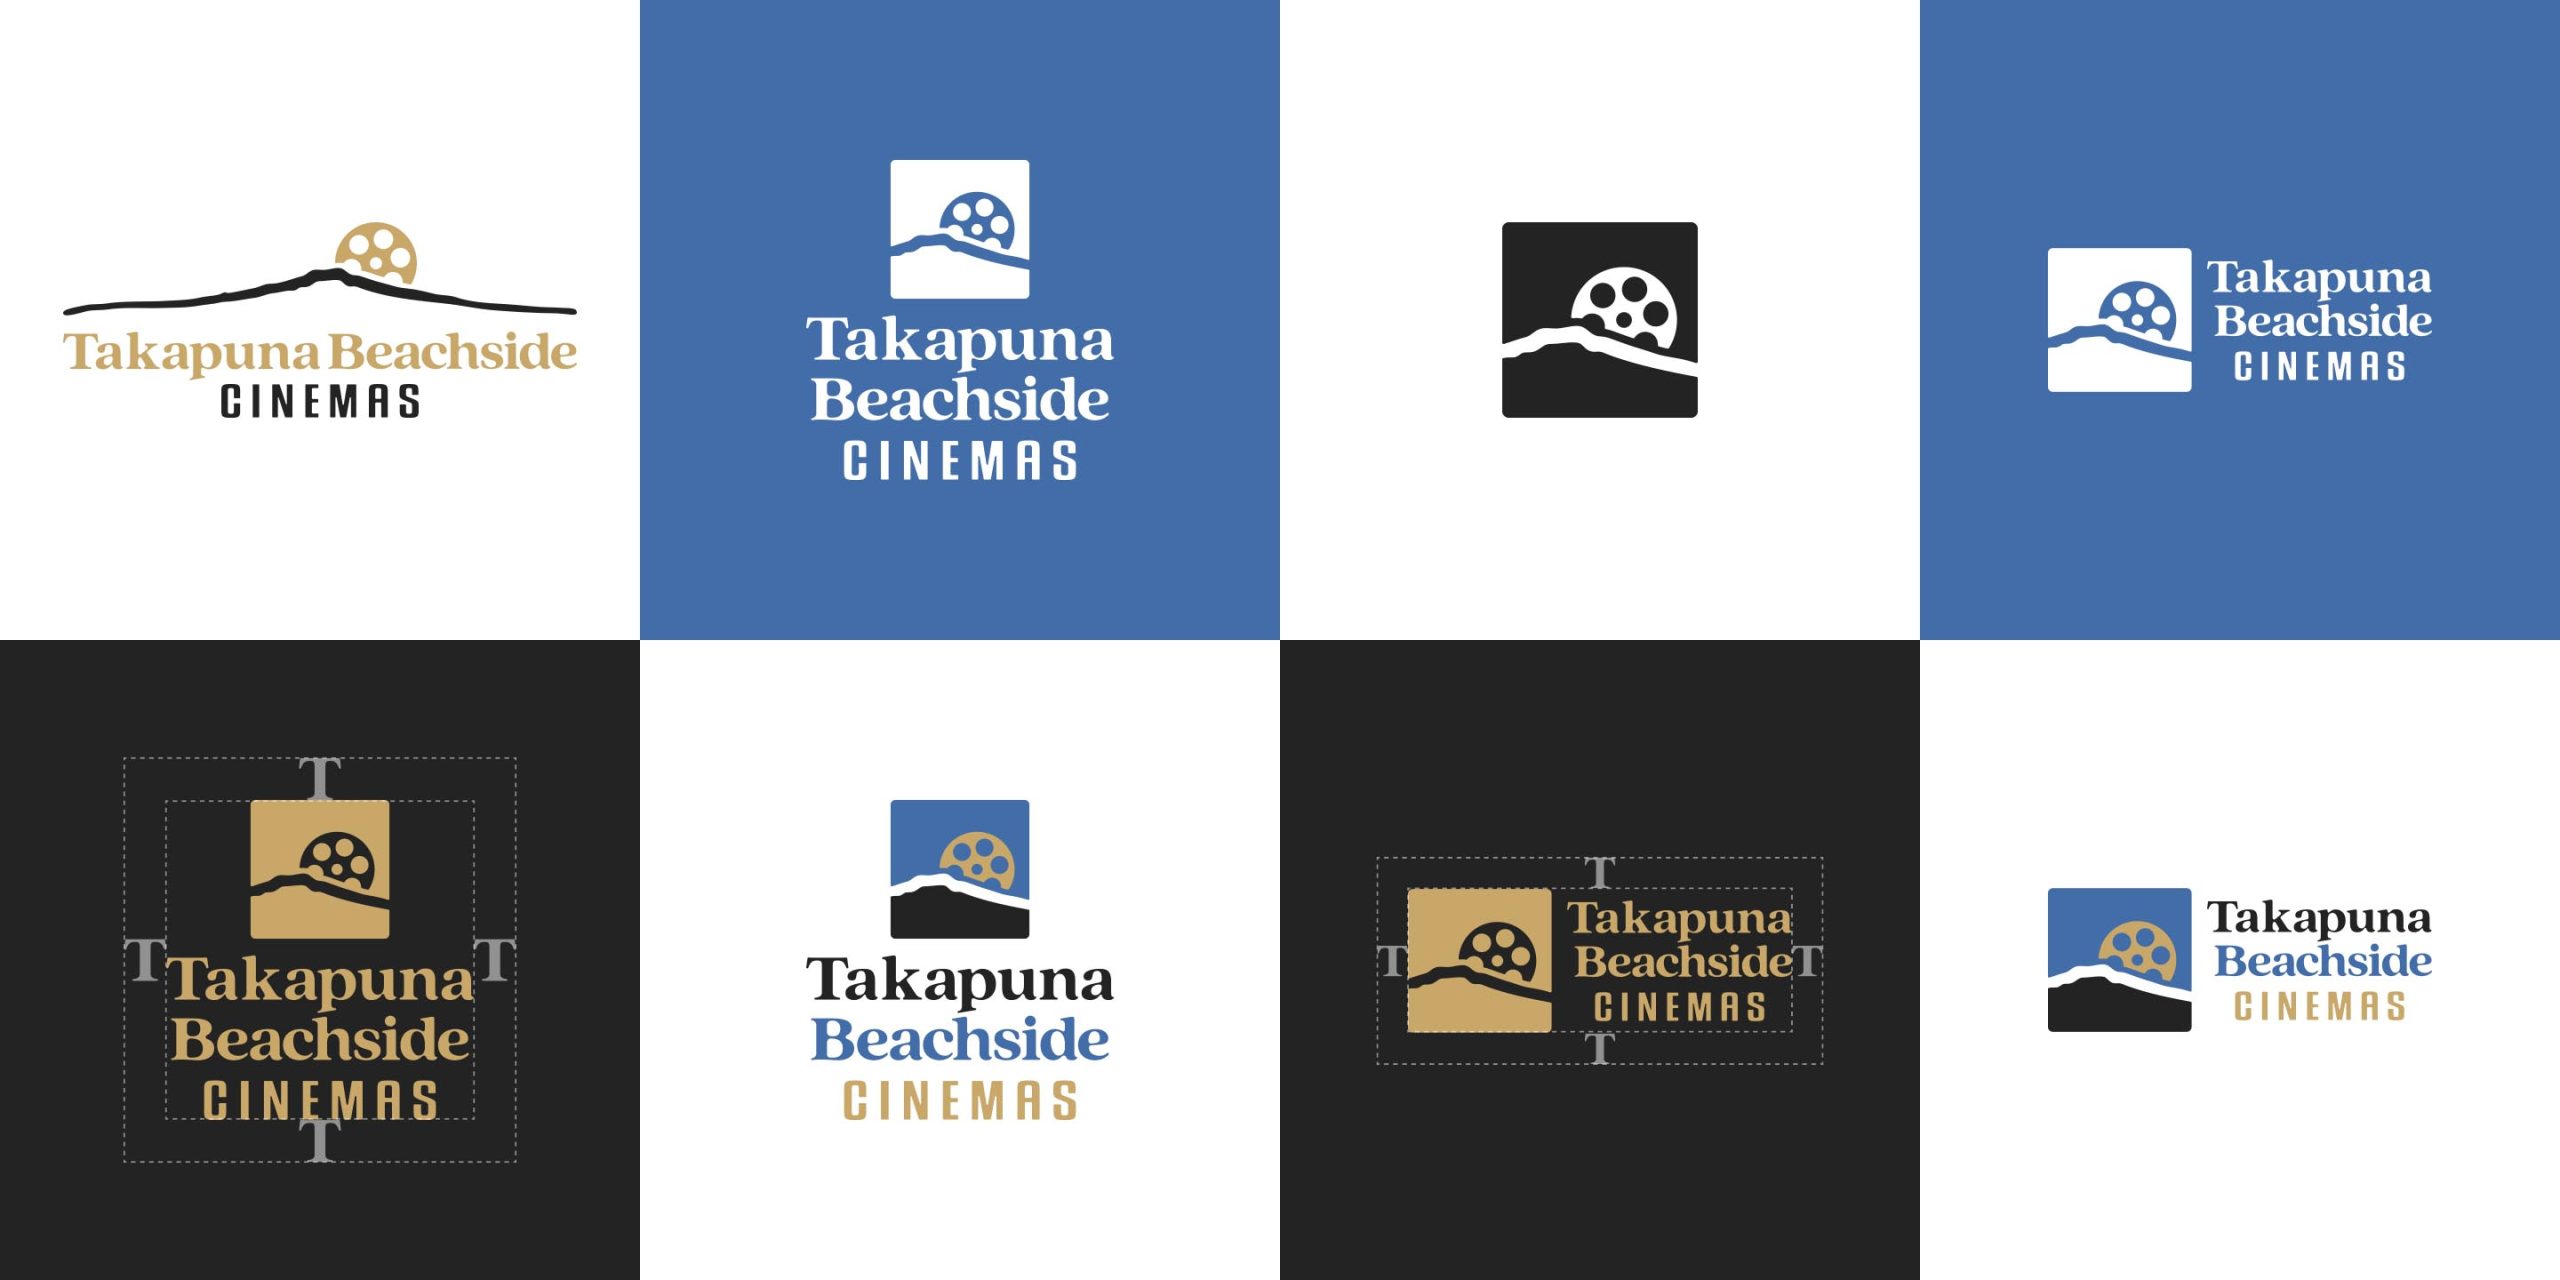 8 different logos for Takapuna Beachside Cinemas